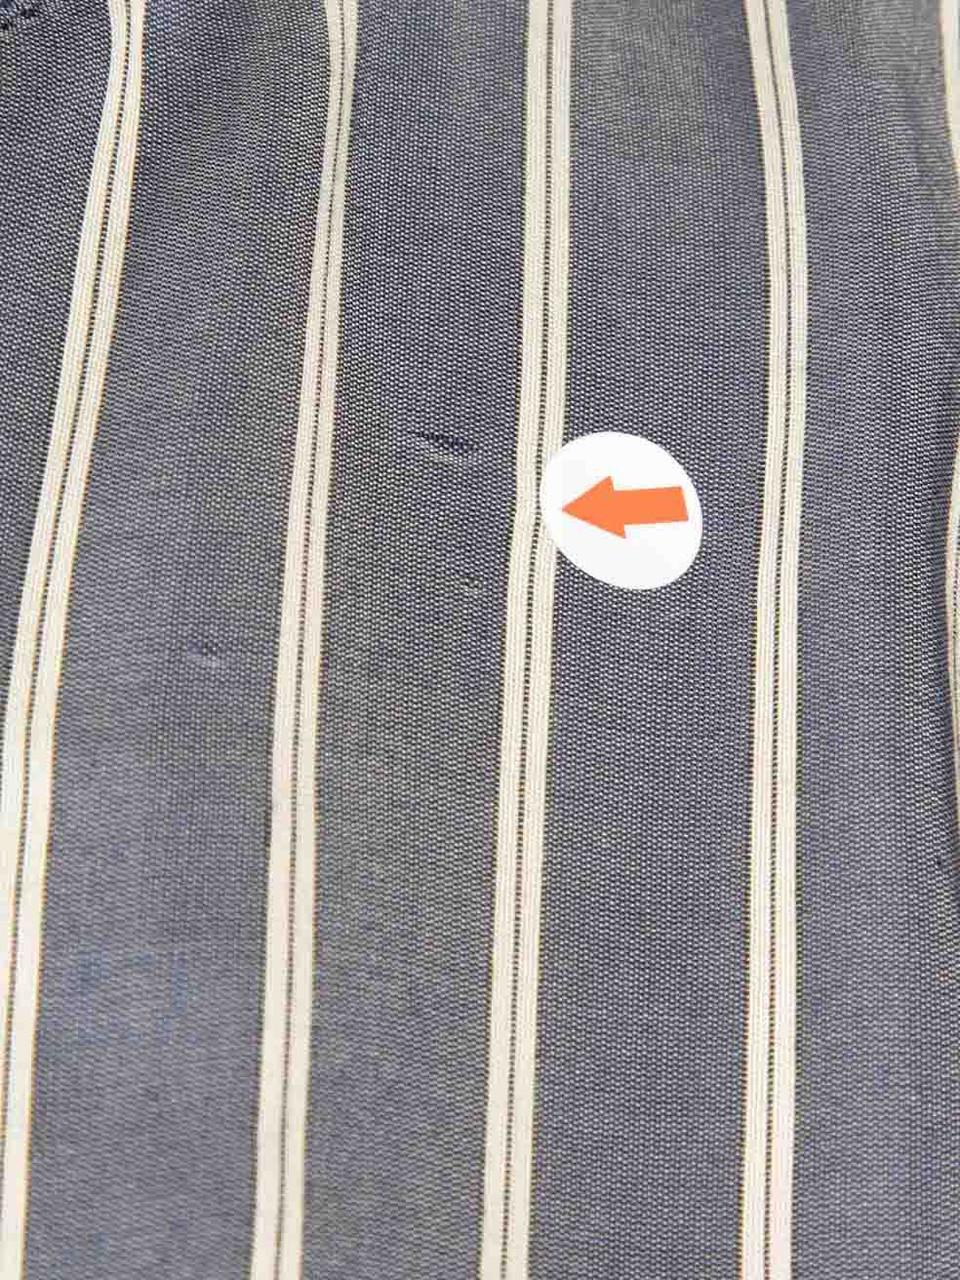 Max Mara Max Mara Studio Blue Striped Collared Shirt Size M In Excellent Condition For Sale In London, GB